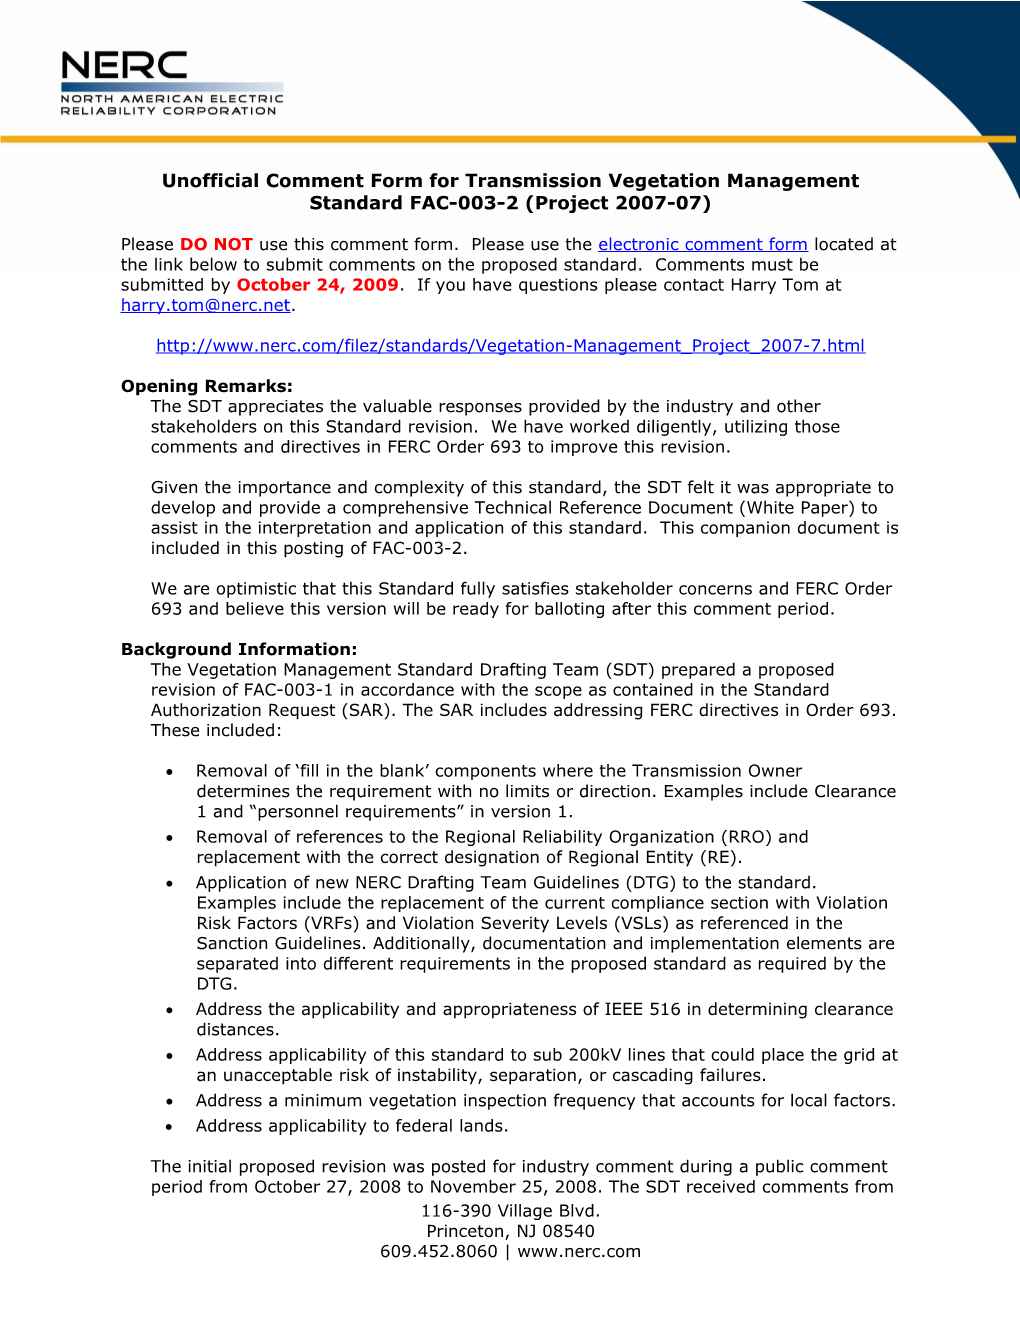 Unofficial Comment Form Transmission Vegetation Management Standard FAC-003-2